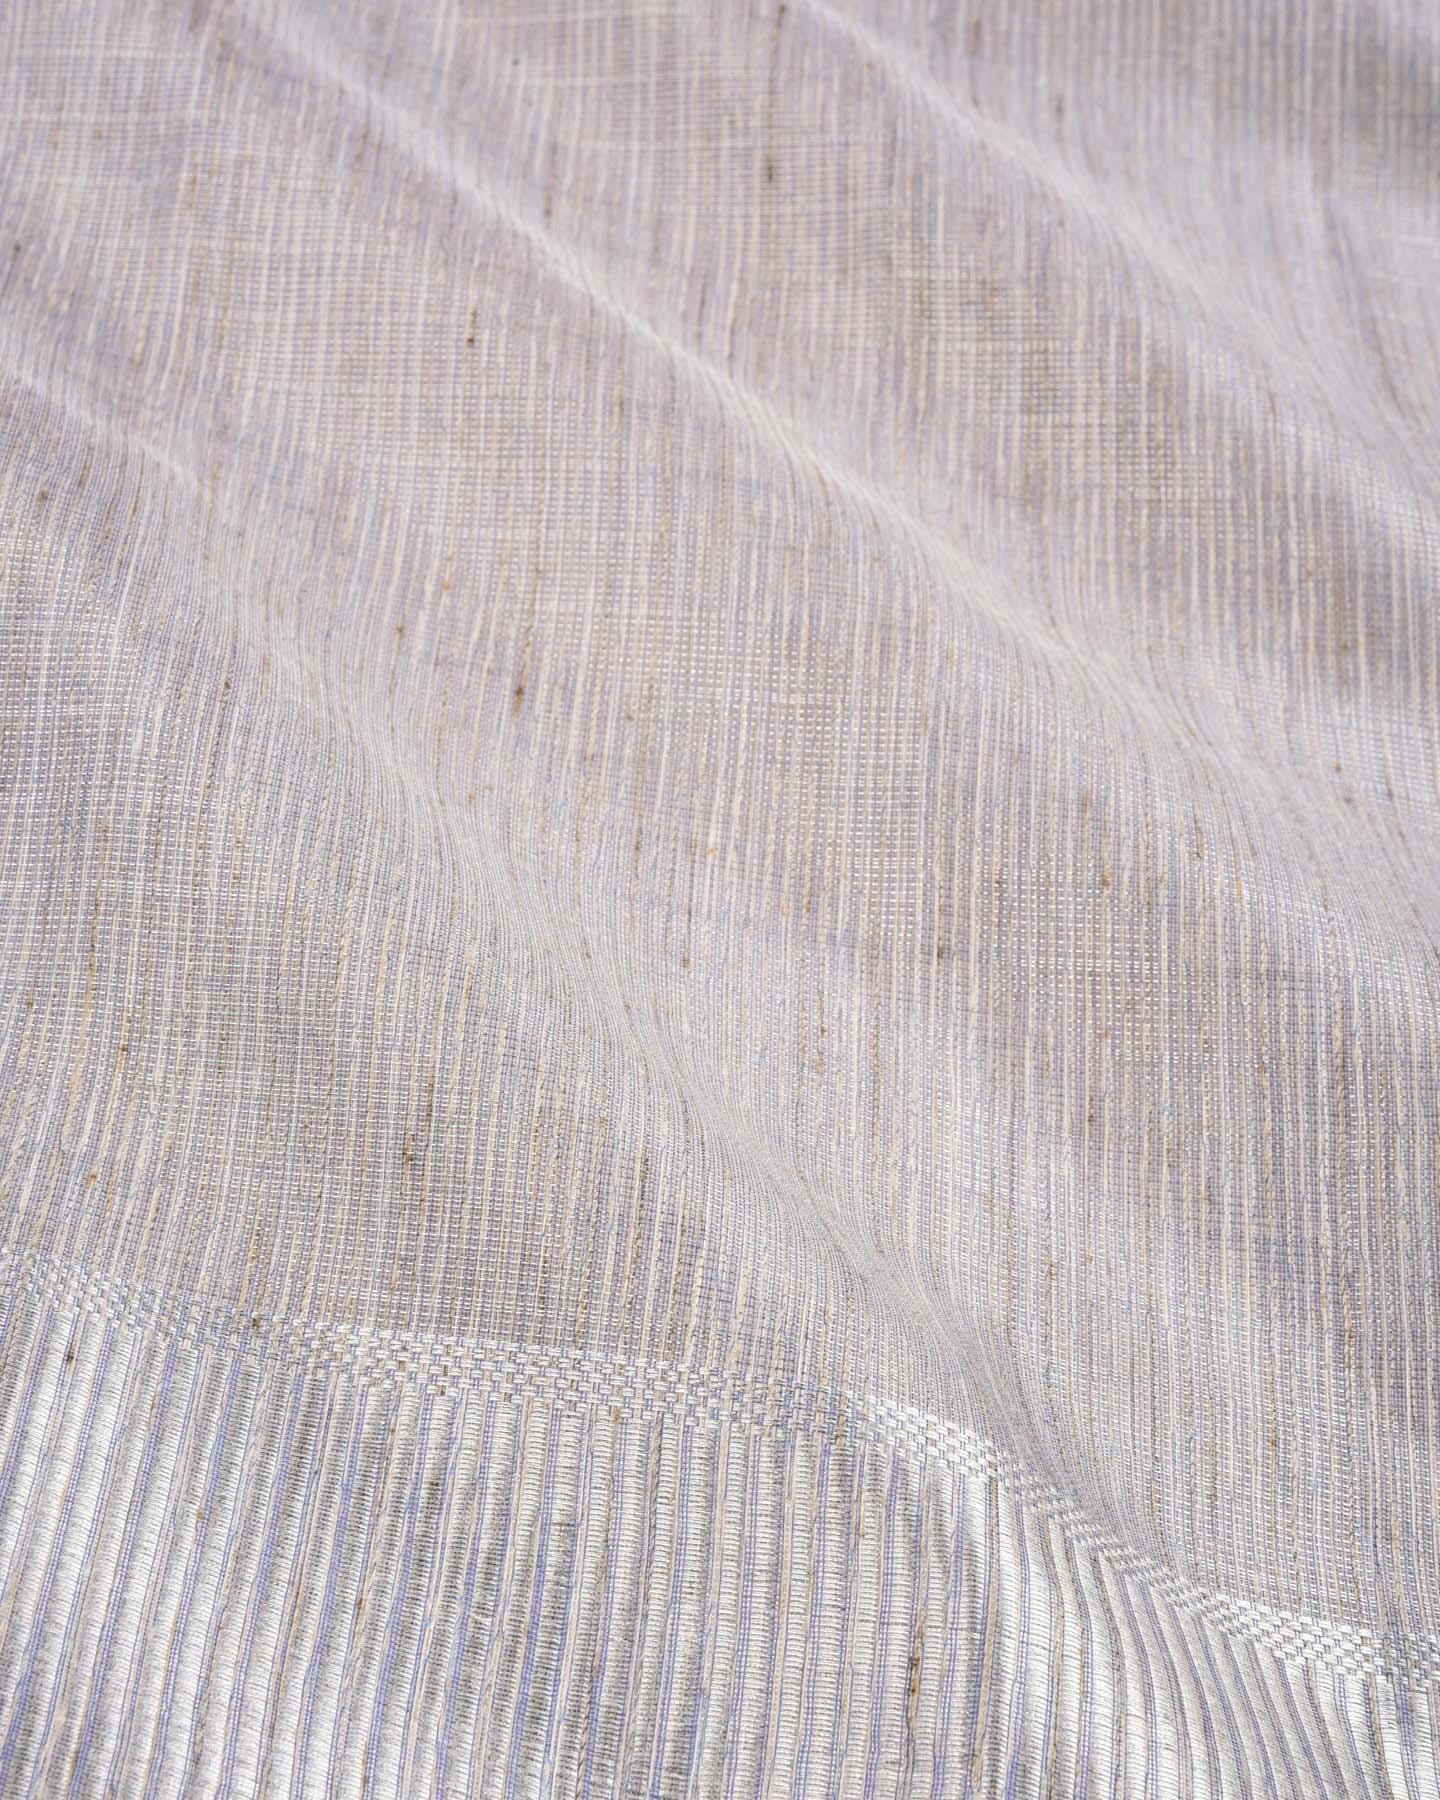 Metallic Blue Banarasi Contemporary Brocade Woven Blended Cotton Tissue Saree with Striped Zari Border - By HolyWeaves, Benares